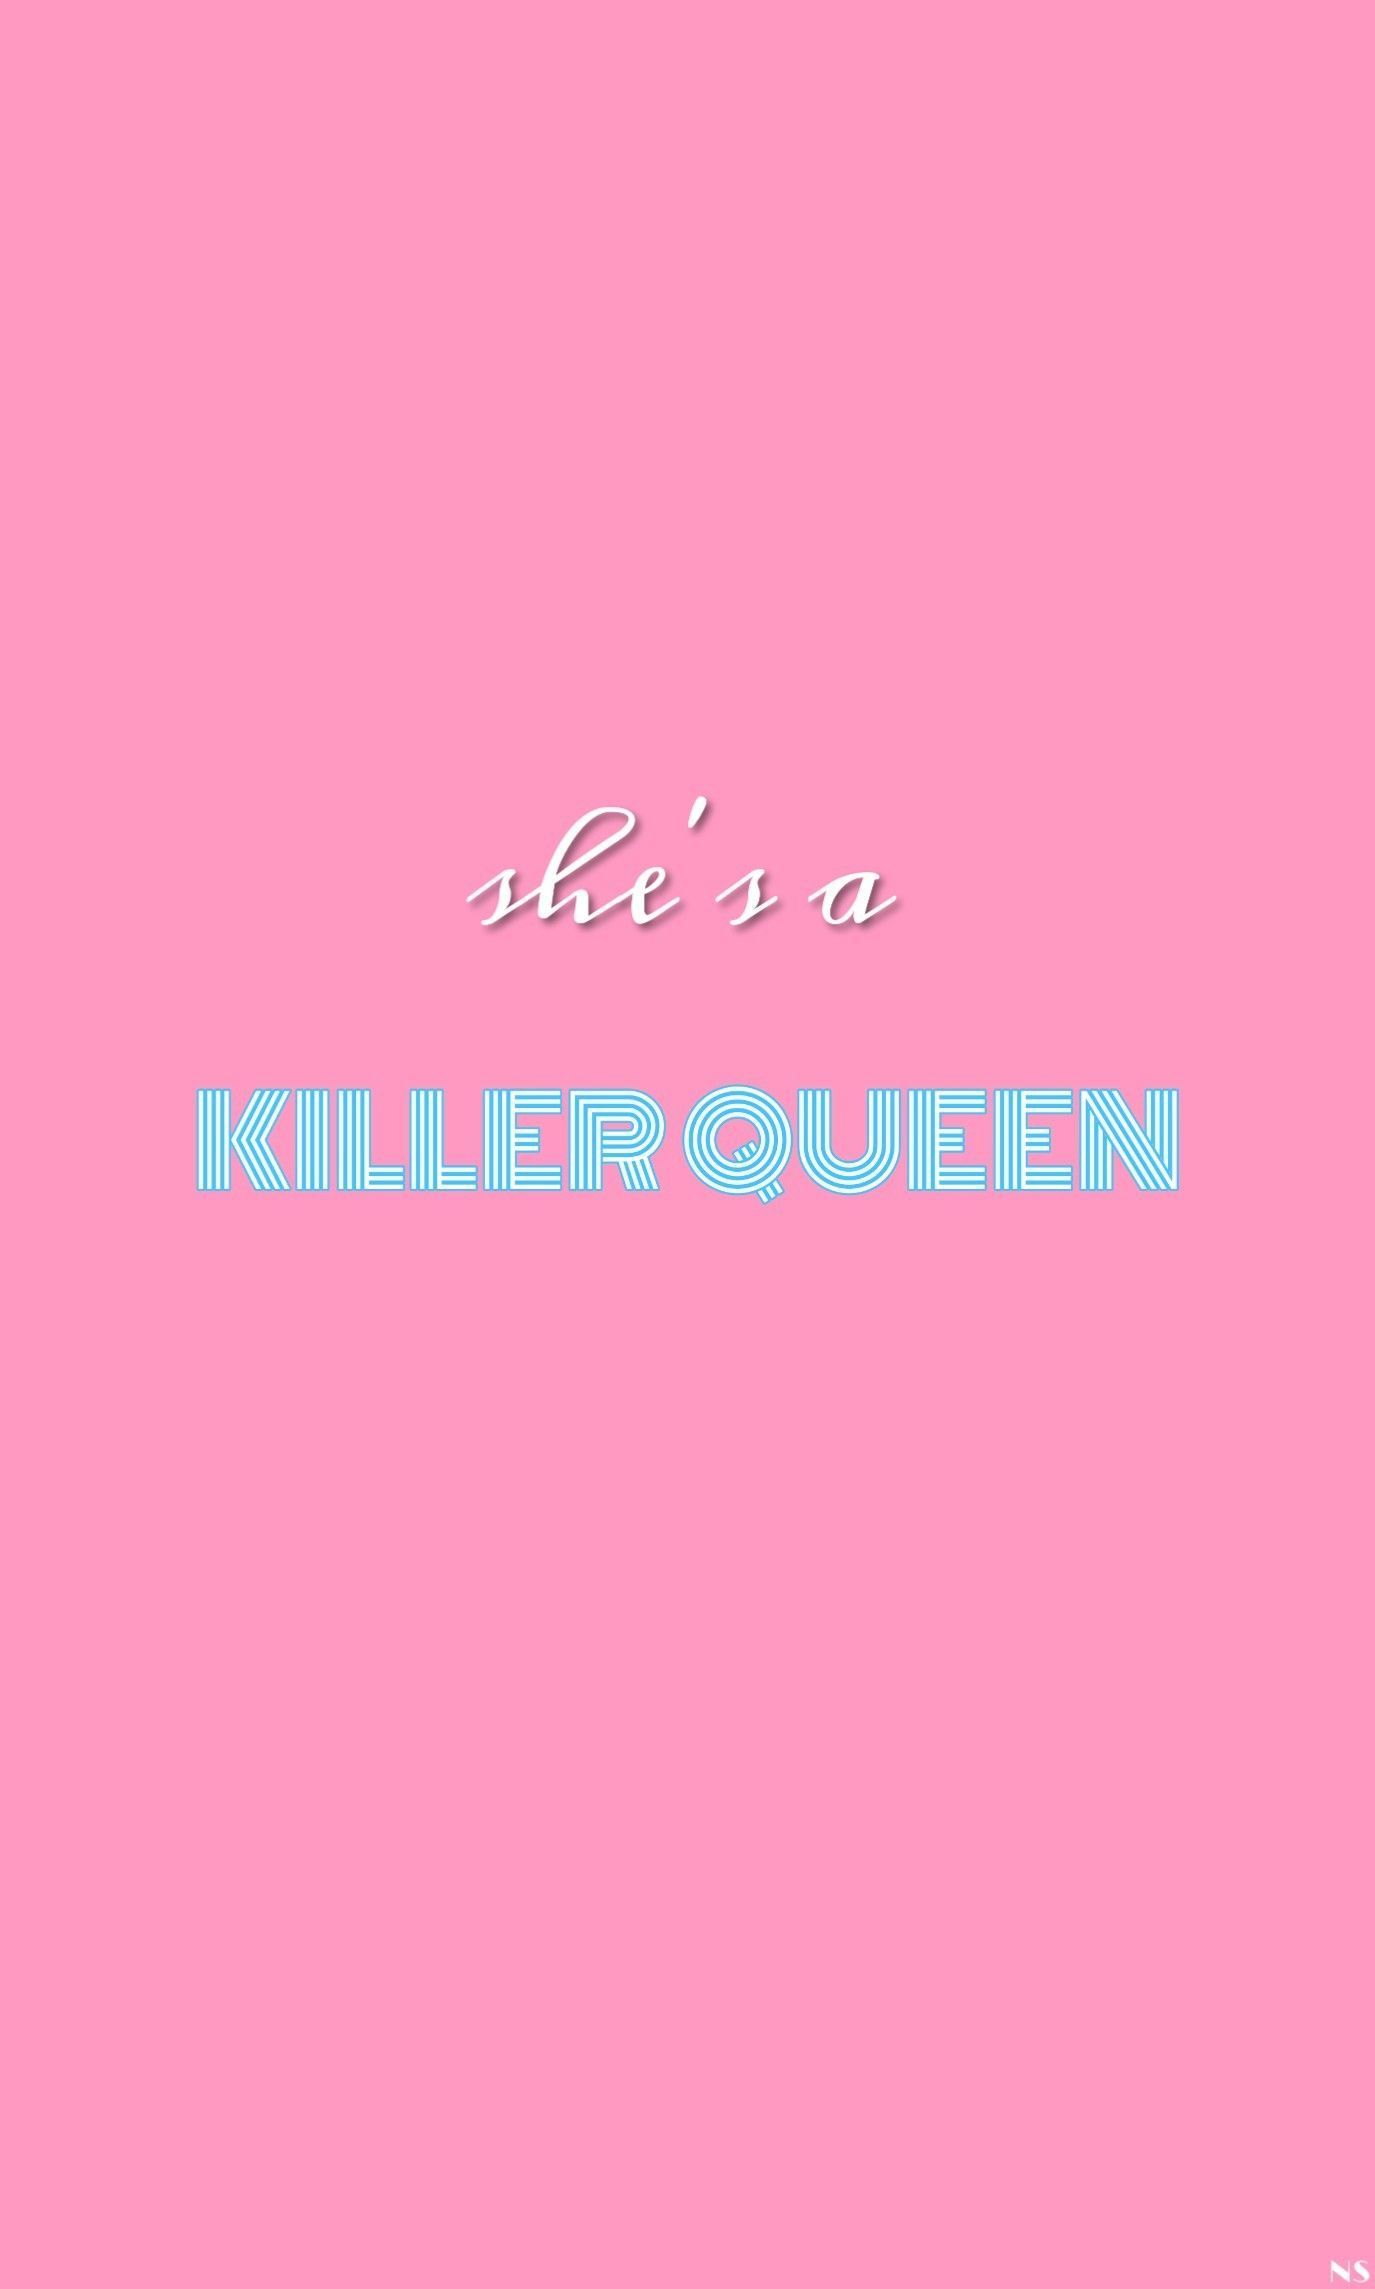 She's a killer queen wallpaper - 